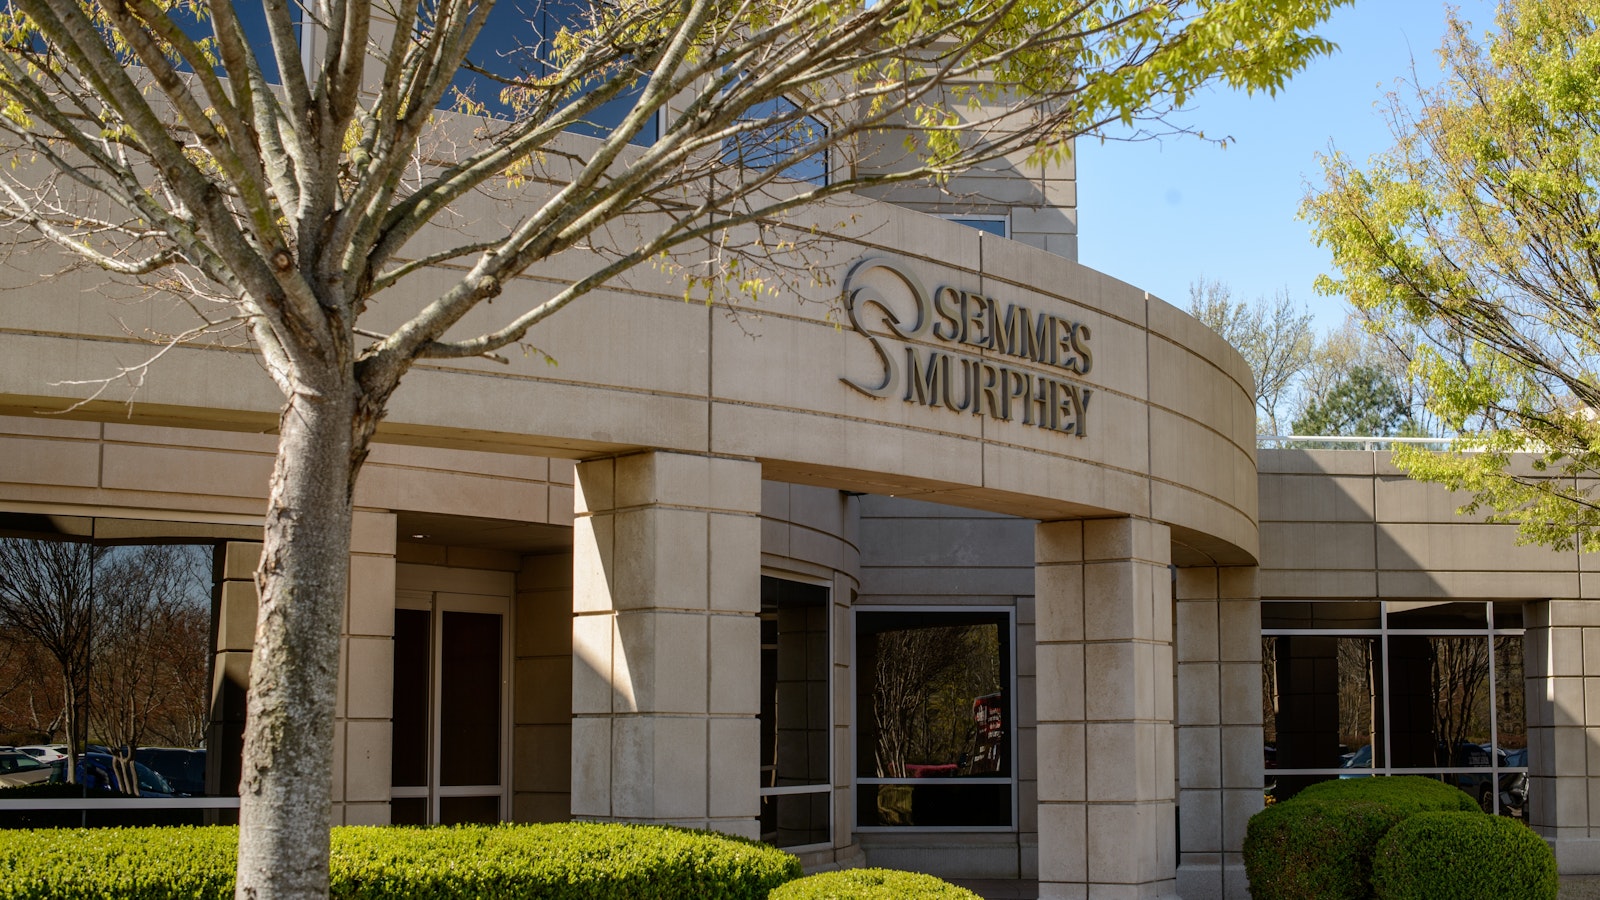 Exterior of Semmes Murphey Clinic on Humphreys